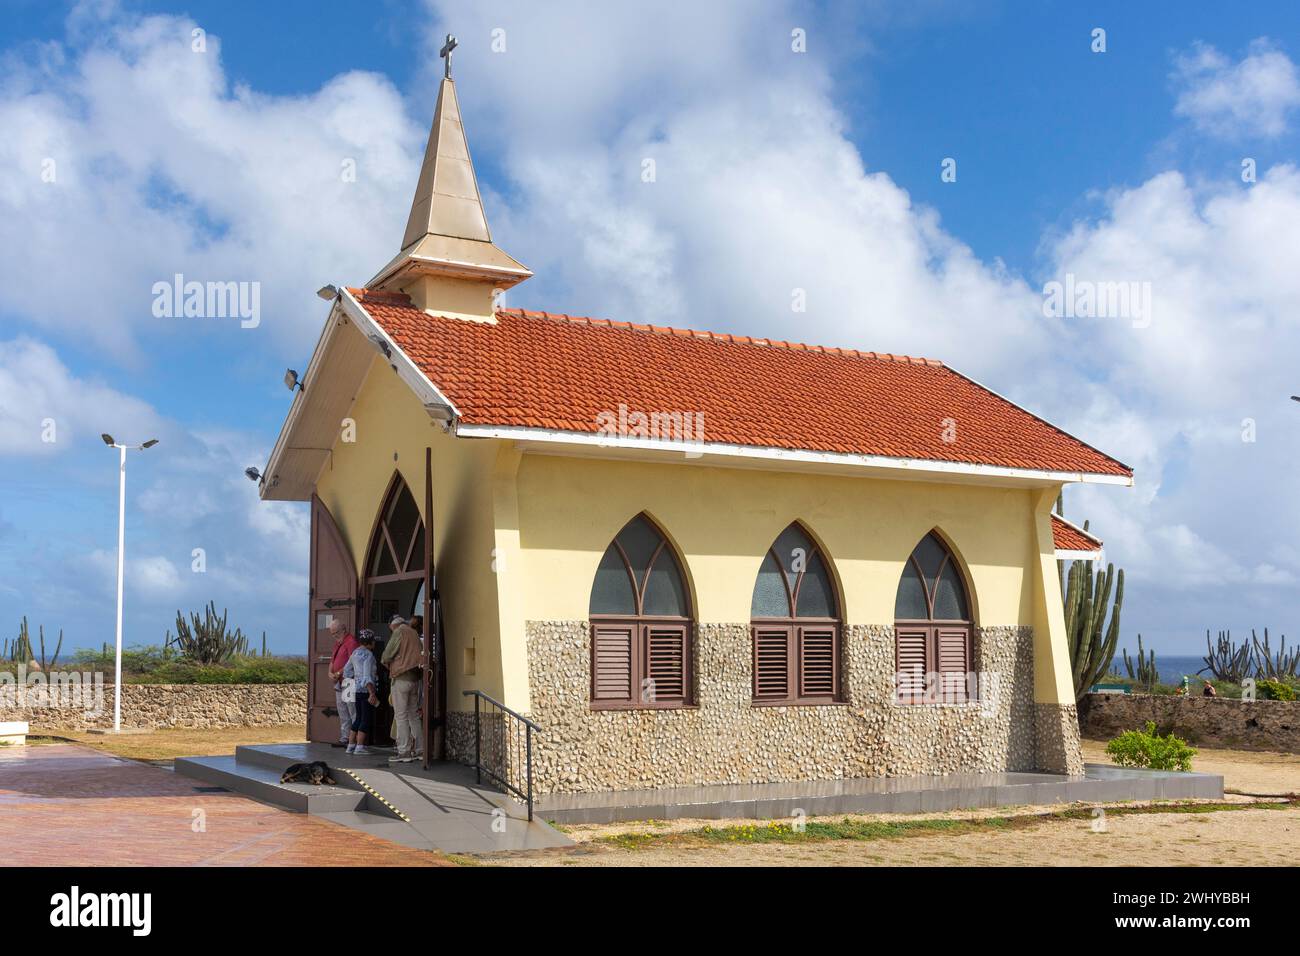 Storica cappella alto Vista, Noord, Aruba, isole ABC, Antille Leeward, Caraibi Foto Stock